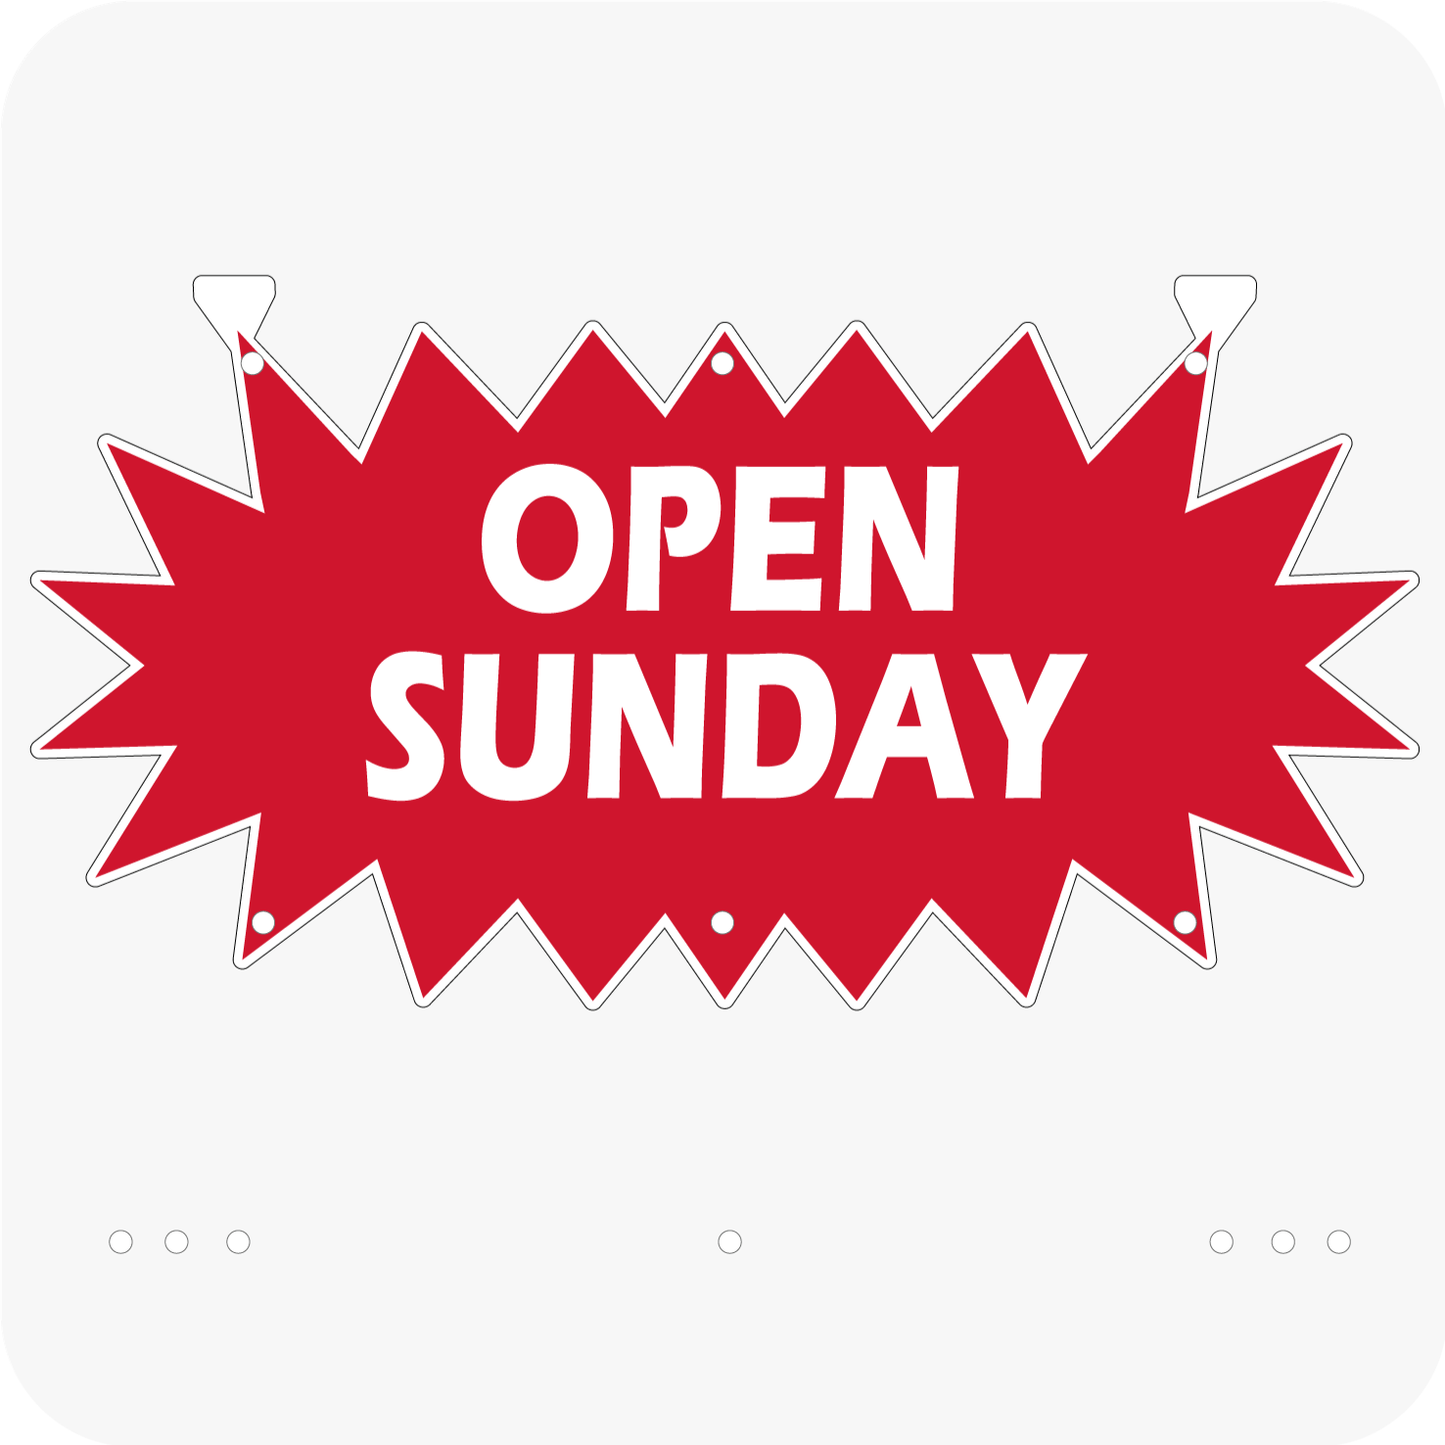 Open Sunday 12 x 24 Corrugated Star Rider - Red